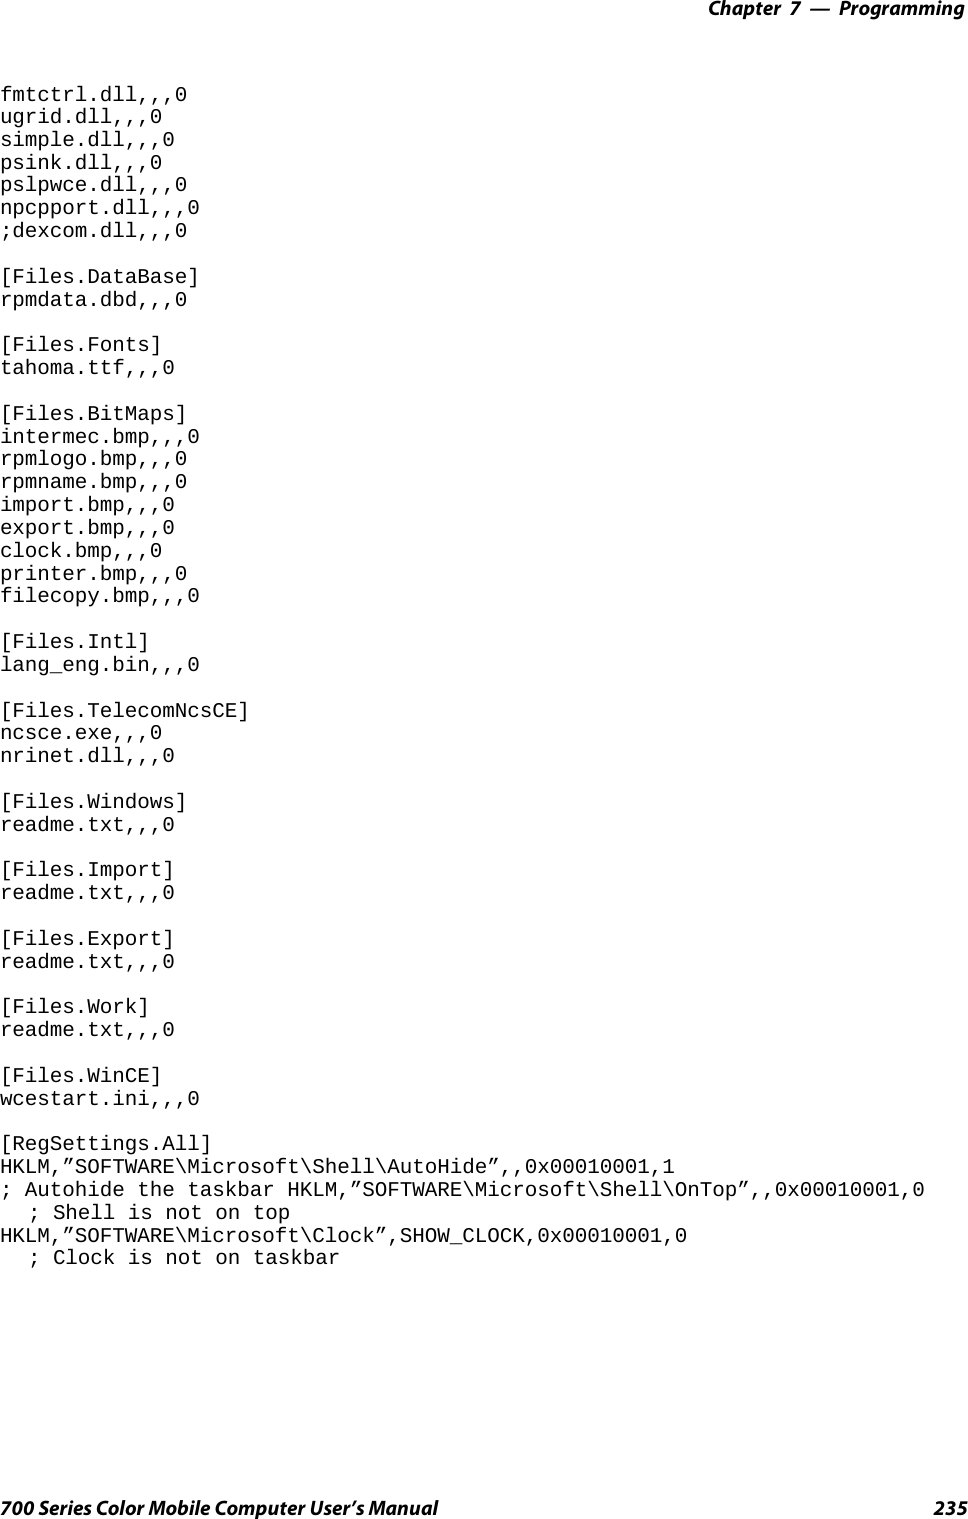 Programming—Chapter 7235700 Series Color Mobile Computer User’s Manualfmtctrl.dll,,,0ugrid.dll,,,0simple.dll,,,0psink.dll,,,0pslpwce.dll,,,0npcpport.dll,,,0;dexcom.dll,,,0[Files.DataBase]rpmdata.dbd,,,0[Files.Fonts]tahoma.ttf,,,0[Files.BitMaps]intermec.bmp,,,0rpmlogo.bmp,,,0rpmname.bmp,,,0import.bmp,,,0export.bmp,,,0clock.bmp,,,0printer.bmp,,,0filecopy.bmp,,,0[Files.Intl]lang_eng.bin,,,0[Files.TelecomNcsCE]ncsce.exe,,,0nrinet.dll,,,0[Files.Windows]readme.txt,,,0[Files.Import]readme.txt,,,0[Files.Export]readme.txt,,,0[Files.Work]readme.txt,,,0[Files.WinCE]wcestart.ini,,,0[RegSettings.All]HKLM,”SOFTWARE\Microsoft\Shell\AutoHide”,,0x00010001,1; Autohide the taskbar HKLM,”SOFTWARE\Microsoft\Shell\OnTop”,,0x00010001,0; Shell is not on topHKLM,”SOFTWARE\Microsoft\Clock”,SHOW_CLOCK,0x00010001,0; Clock is not on taskbar